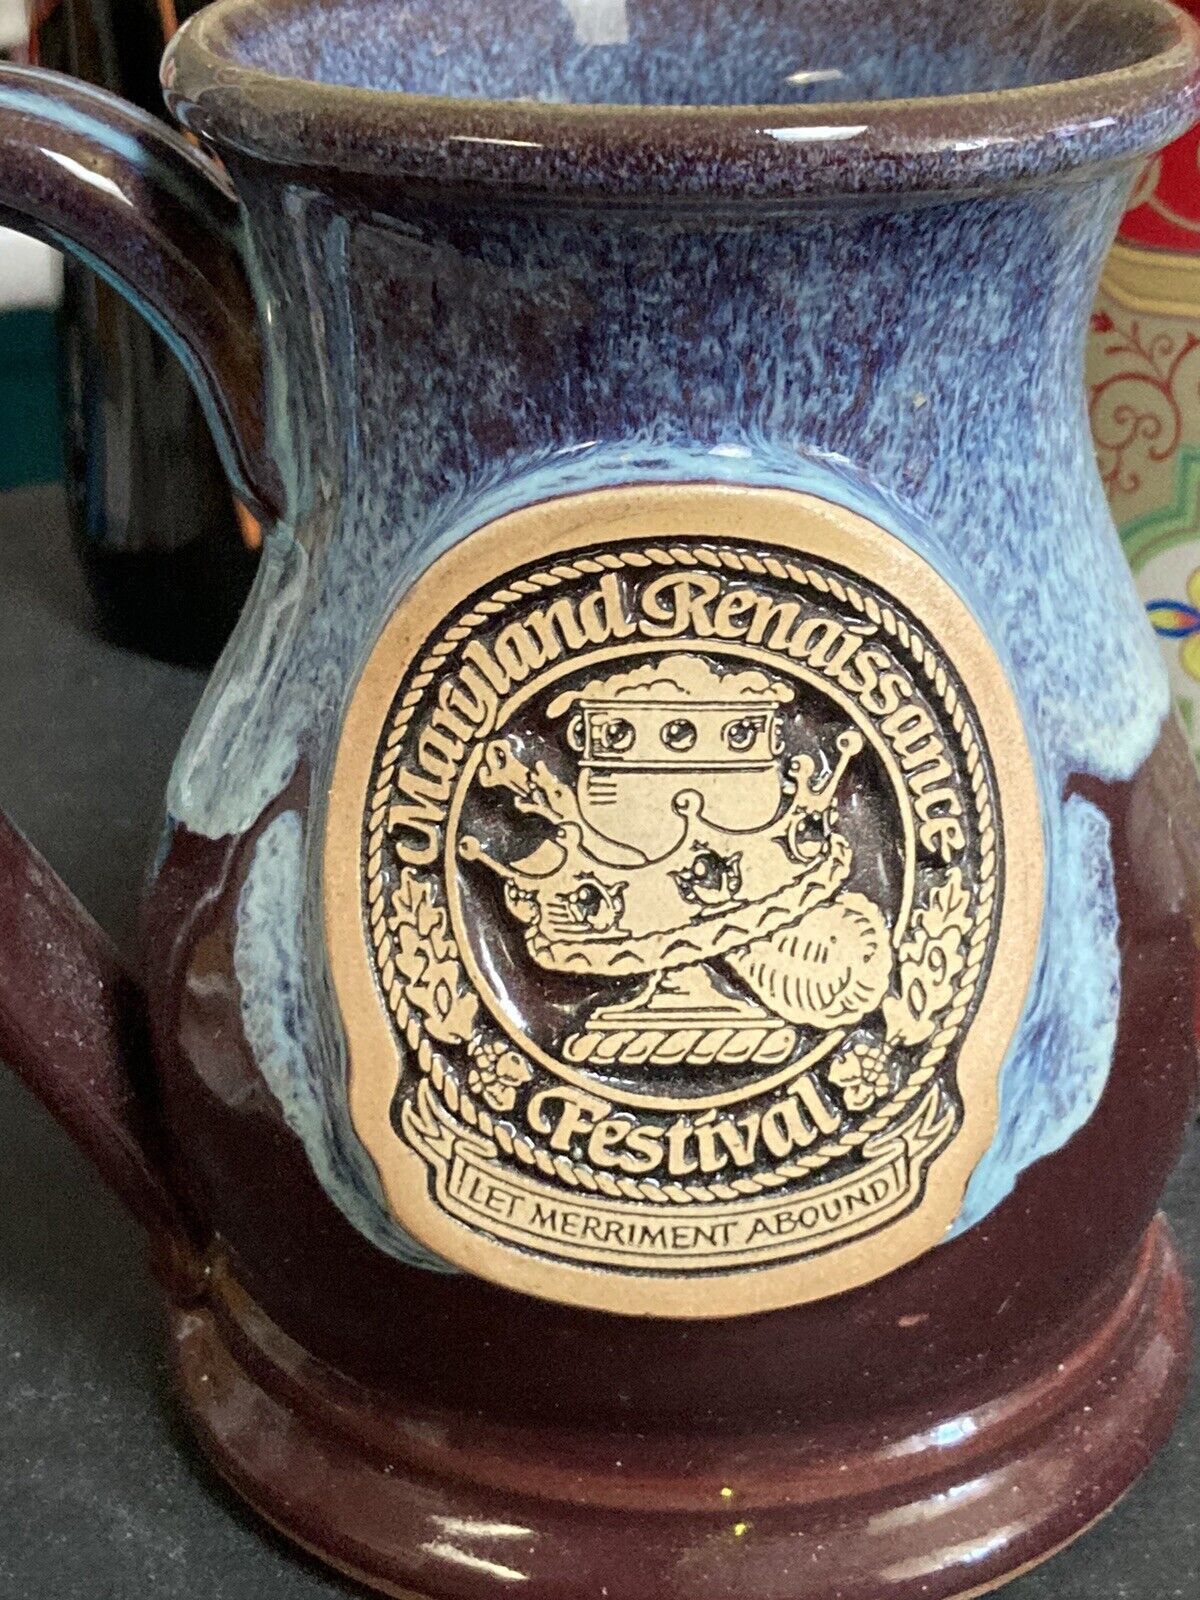 Maryland Renaissance Festival Mug Cup 